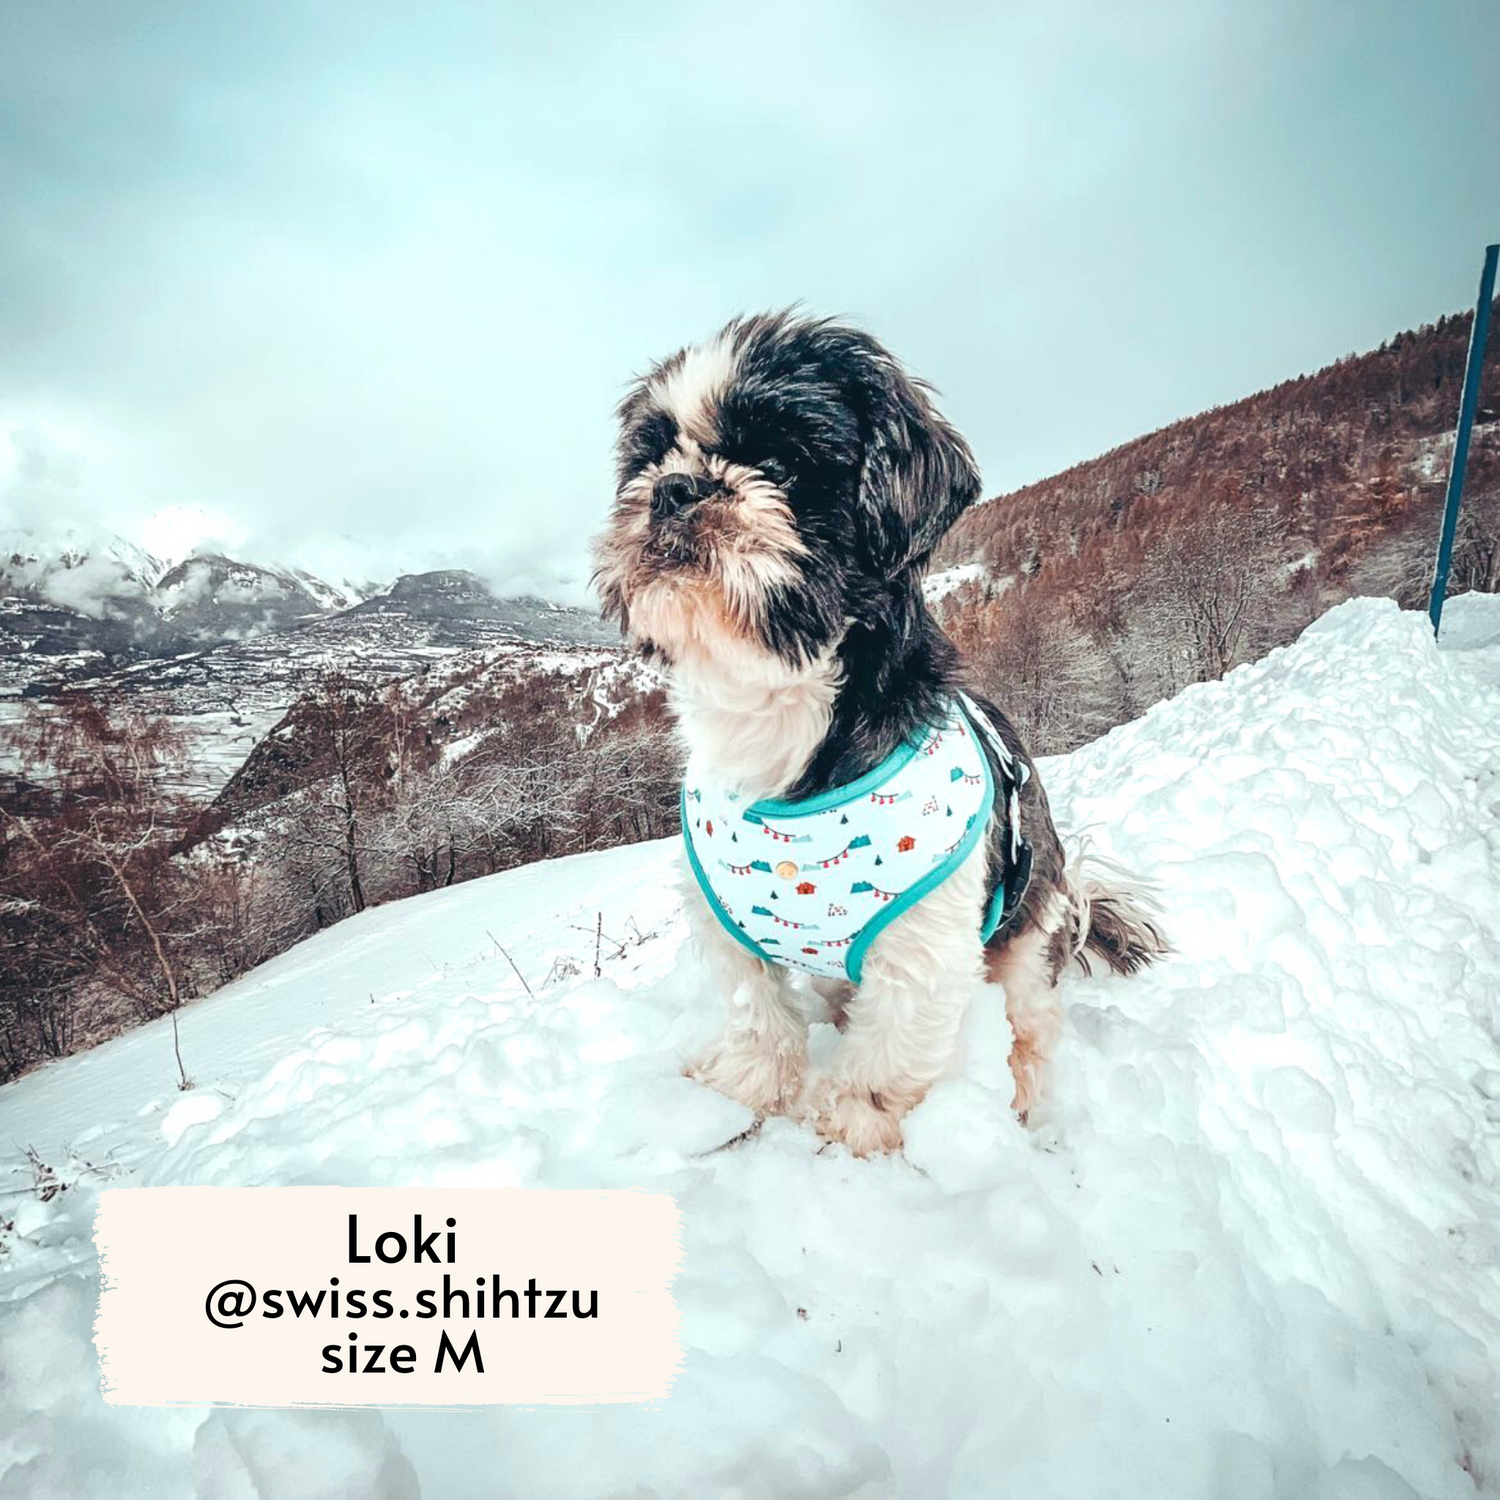 Pata Paw Les Alpes harness as seen on a medium sized dog, Loki